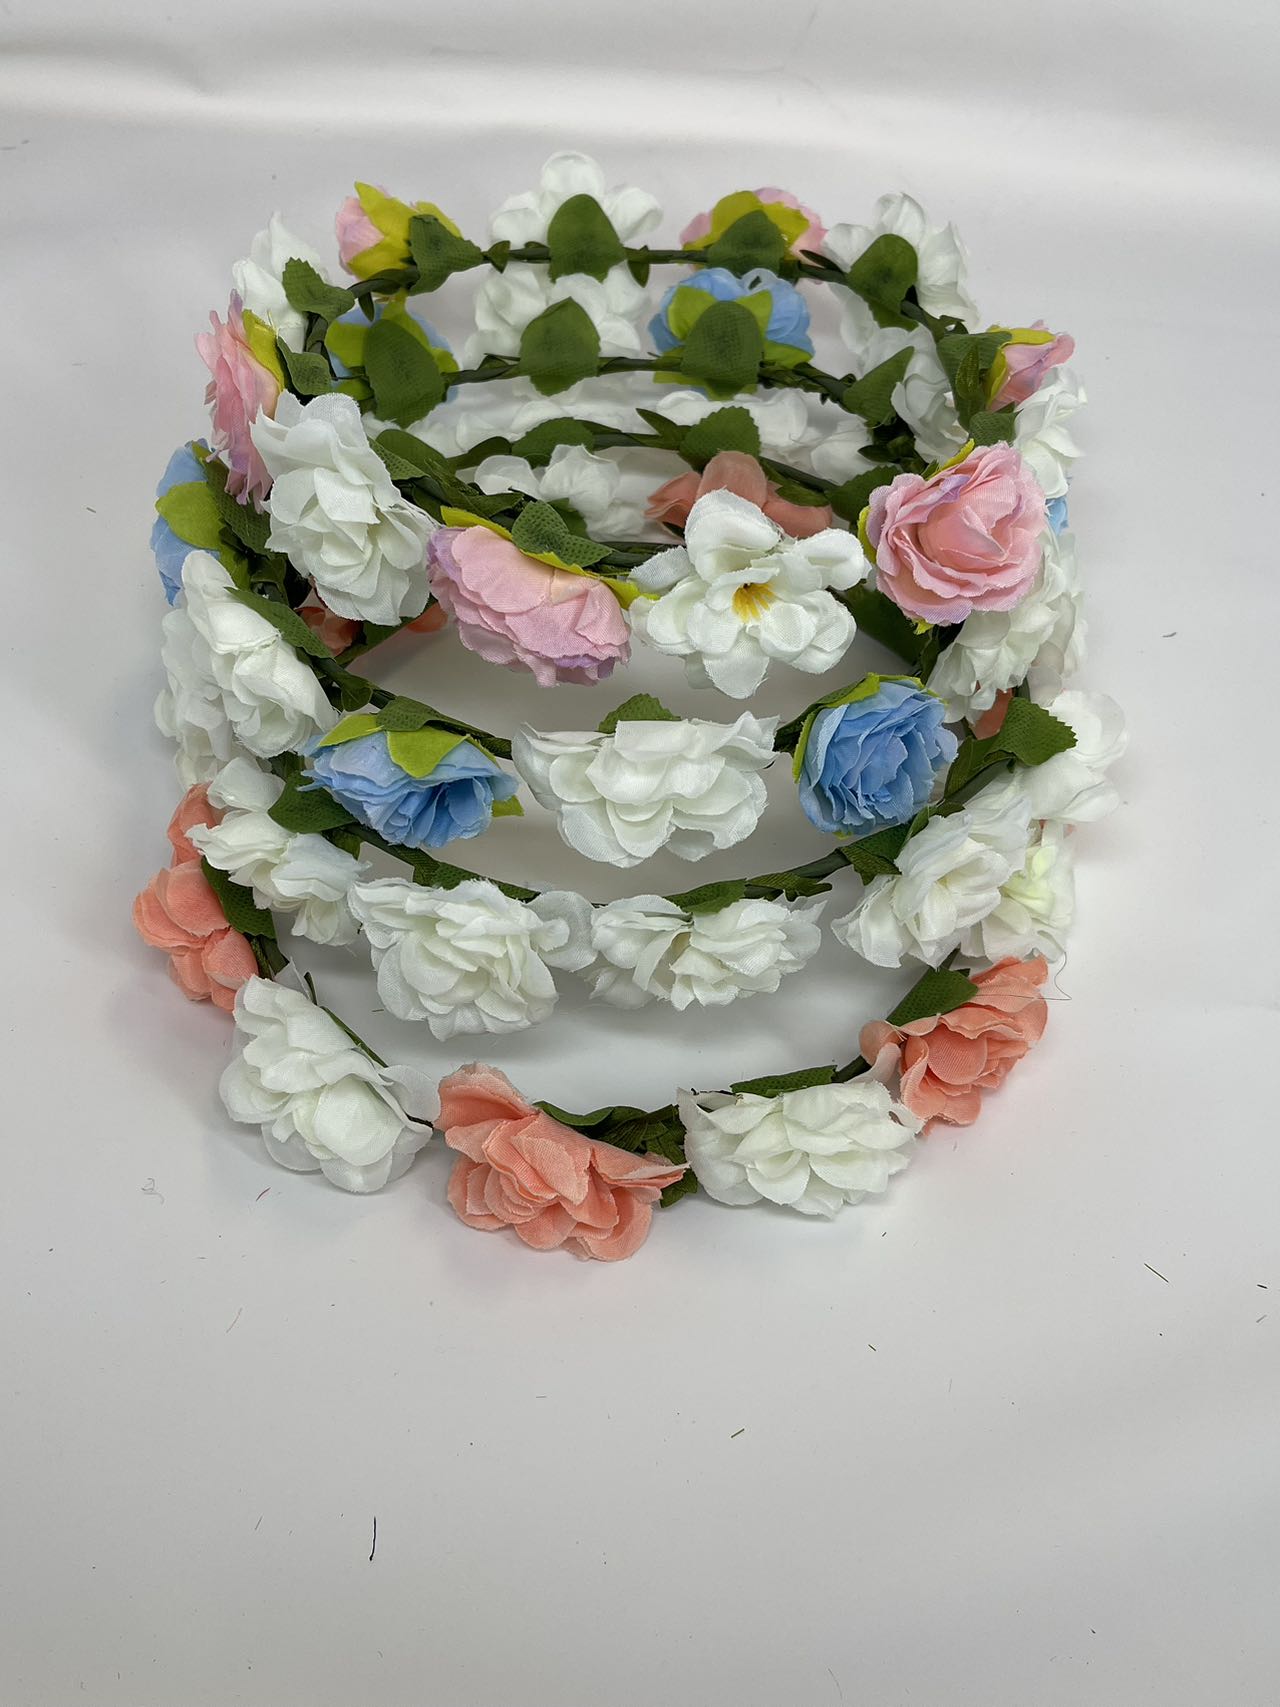 Cute Sweet Flower Decor Hair Bnad Flower Crown Hair Wreath Garland Headband Headpiece with Ribbon Festival Wedding Party Supplies